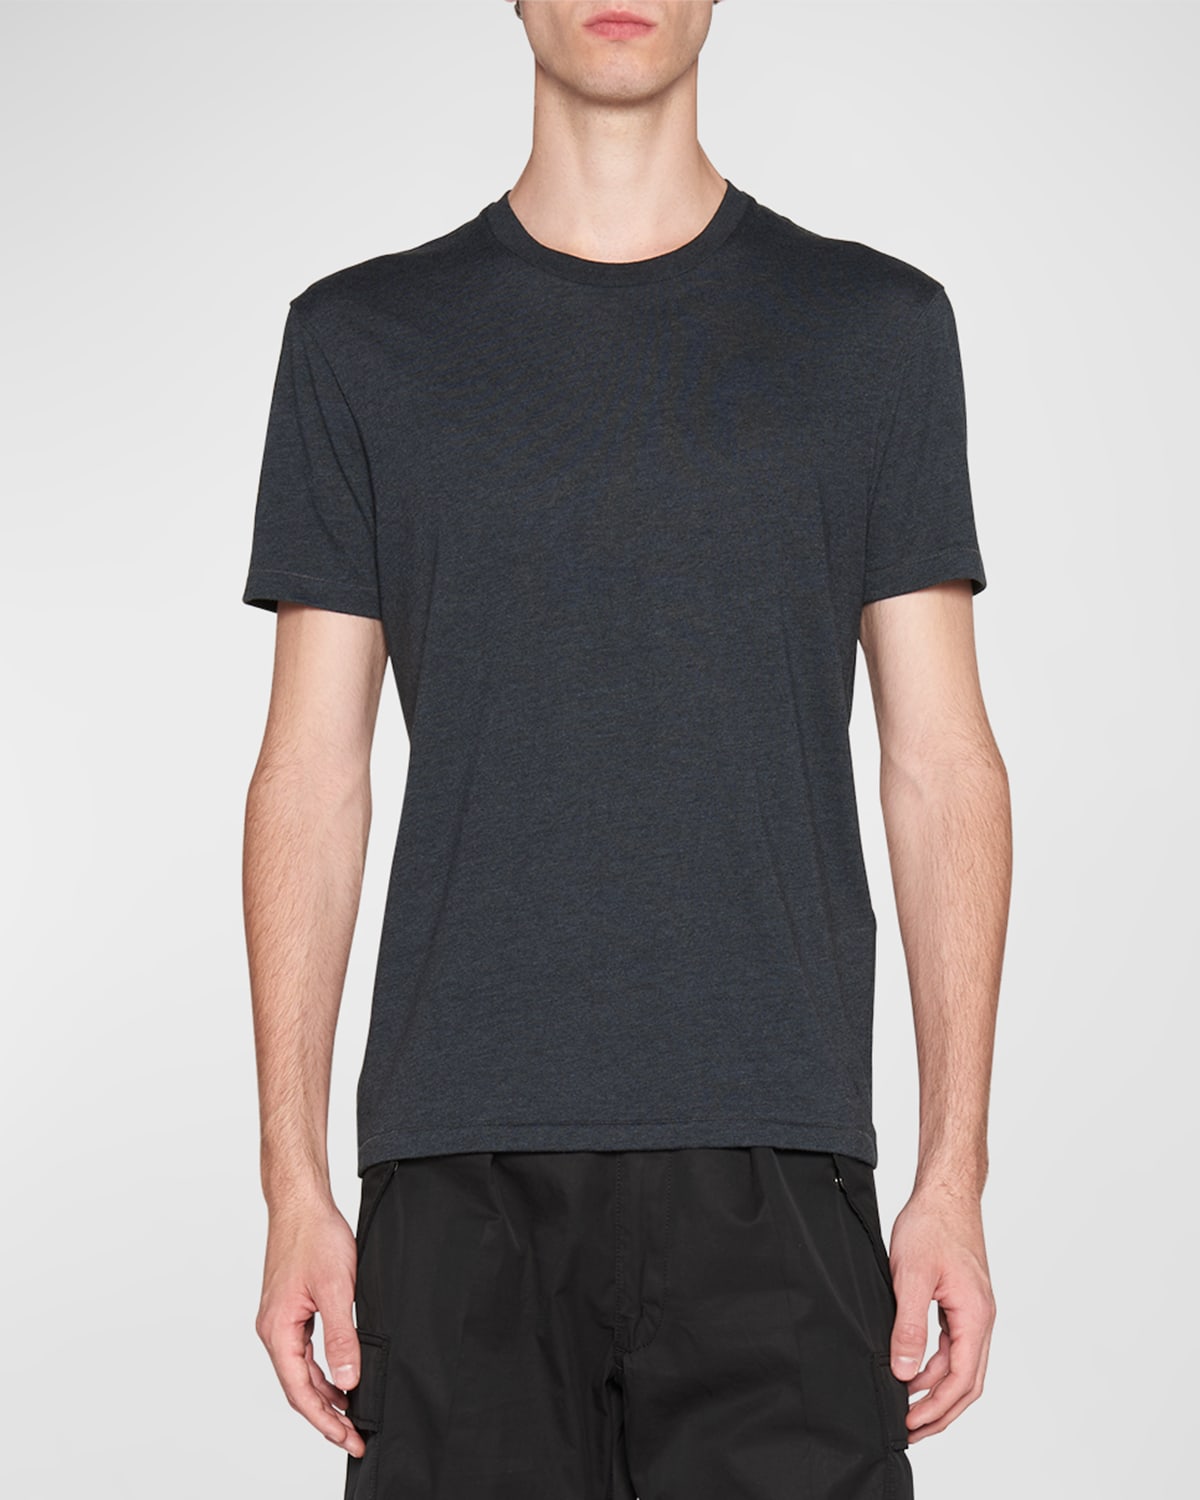 Tom Ford Men's Black Cotton T-Shirt